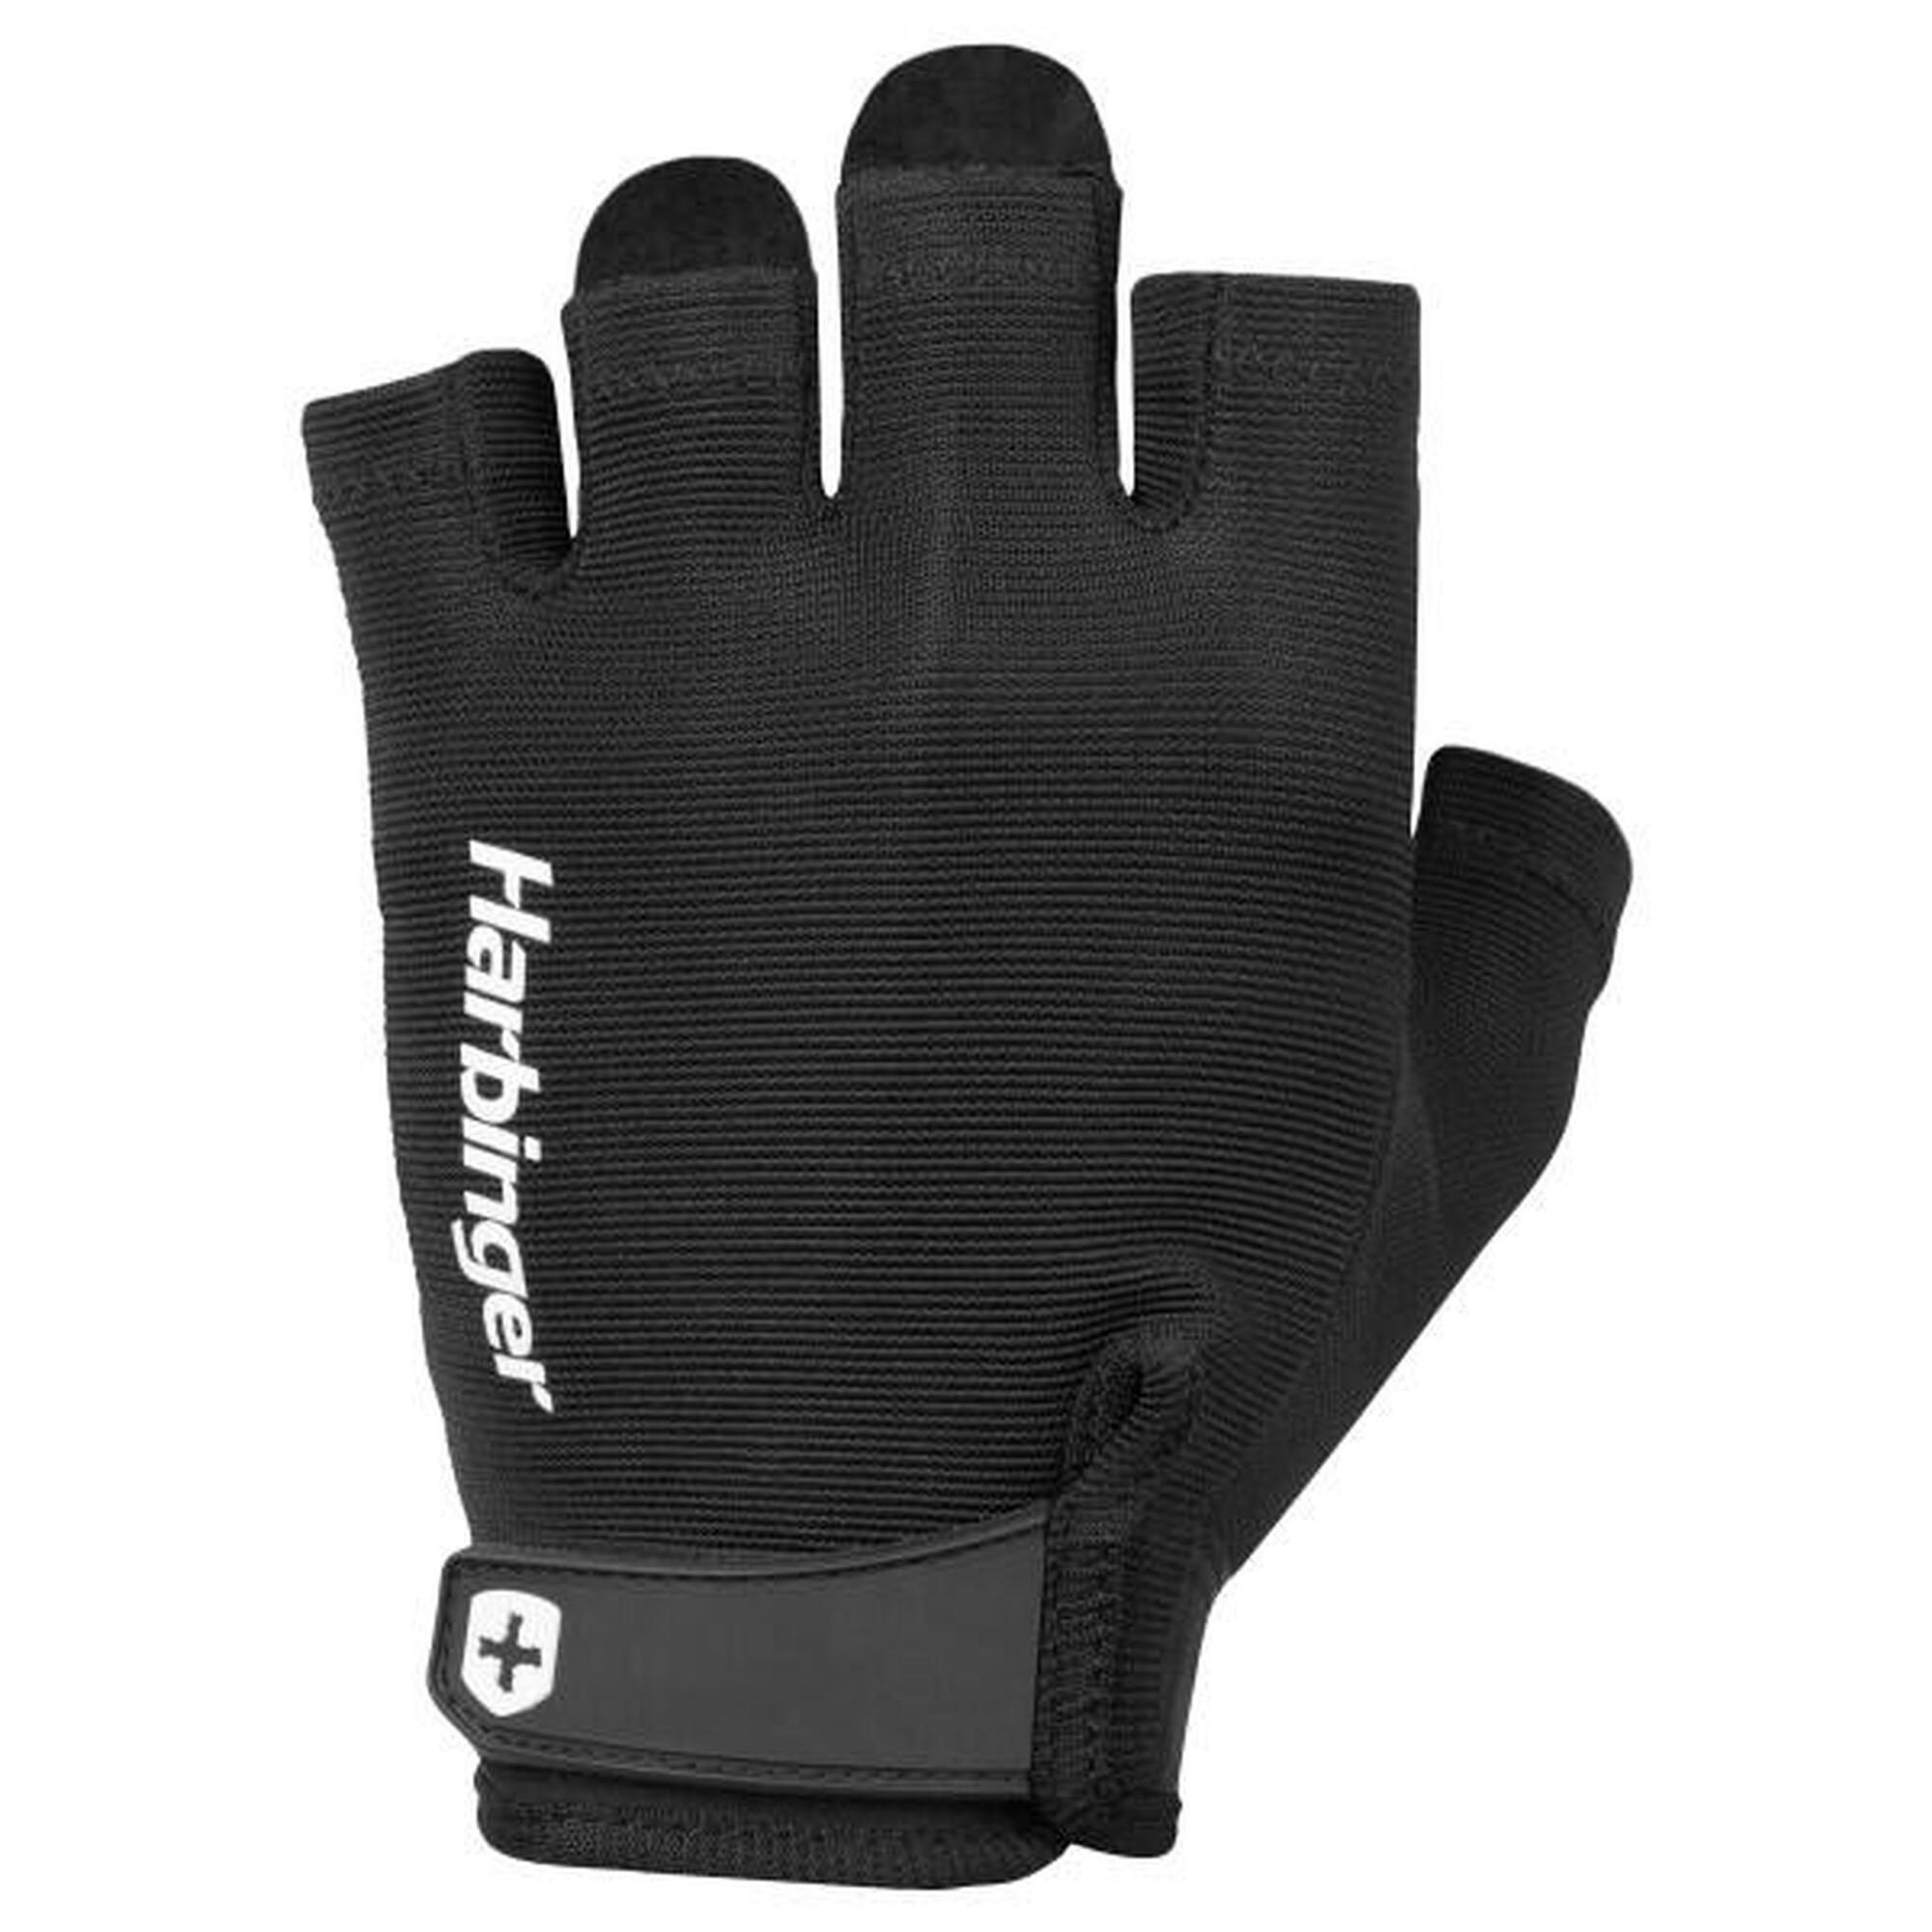 Harbinger Power Handschuhe: Fester Griff, optimaler Komfort. Größe M - Schwarz